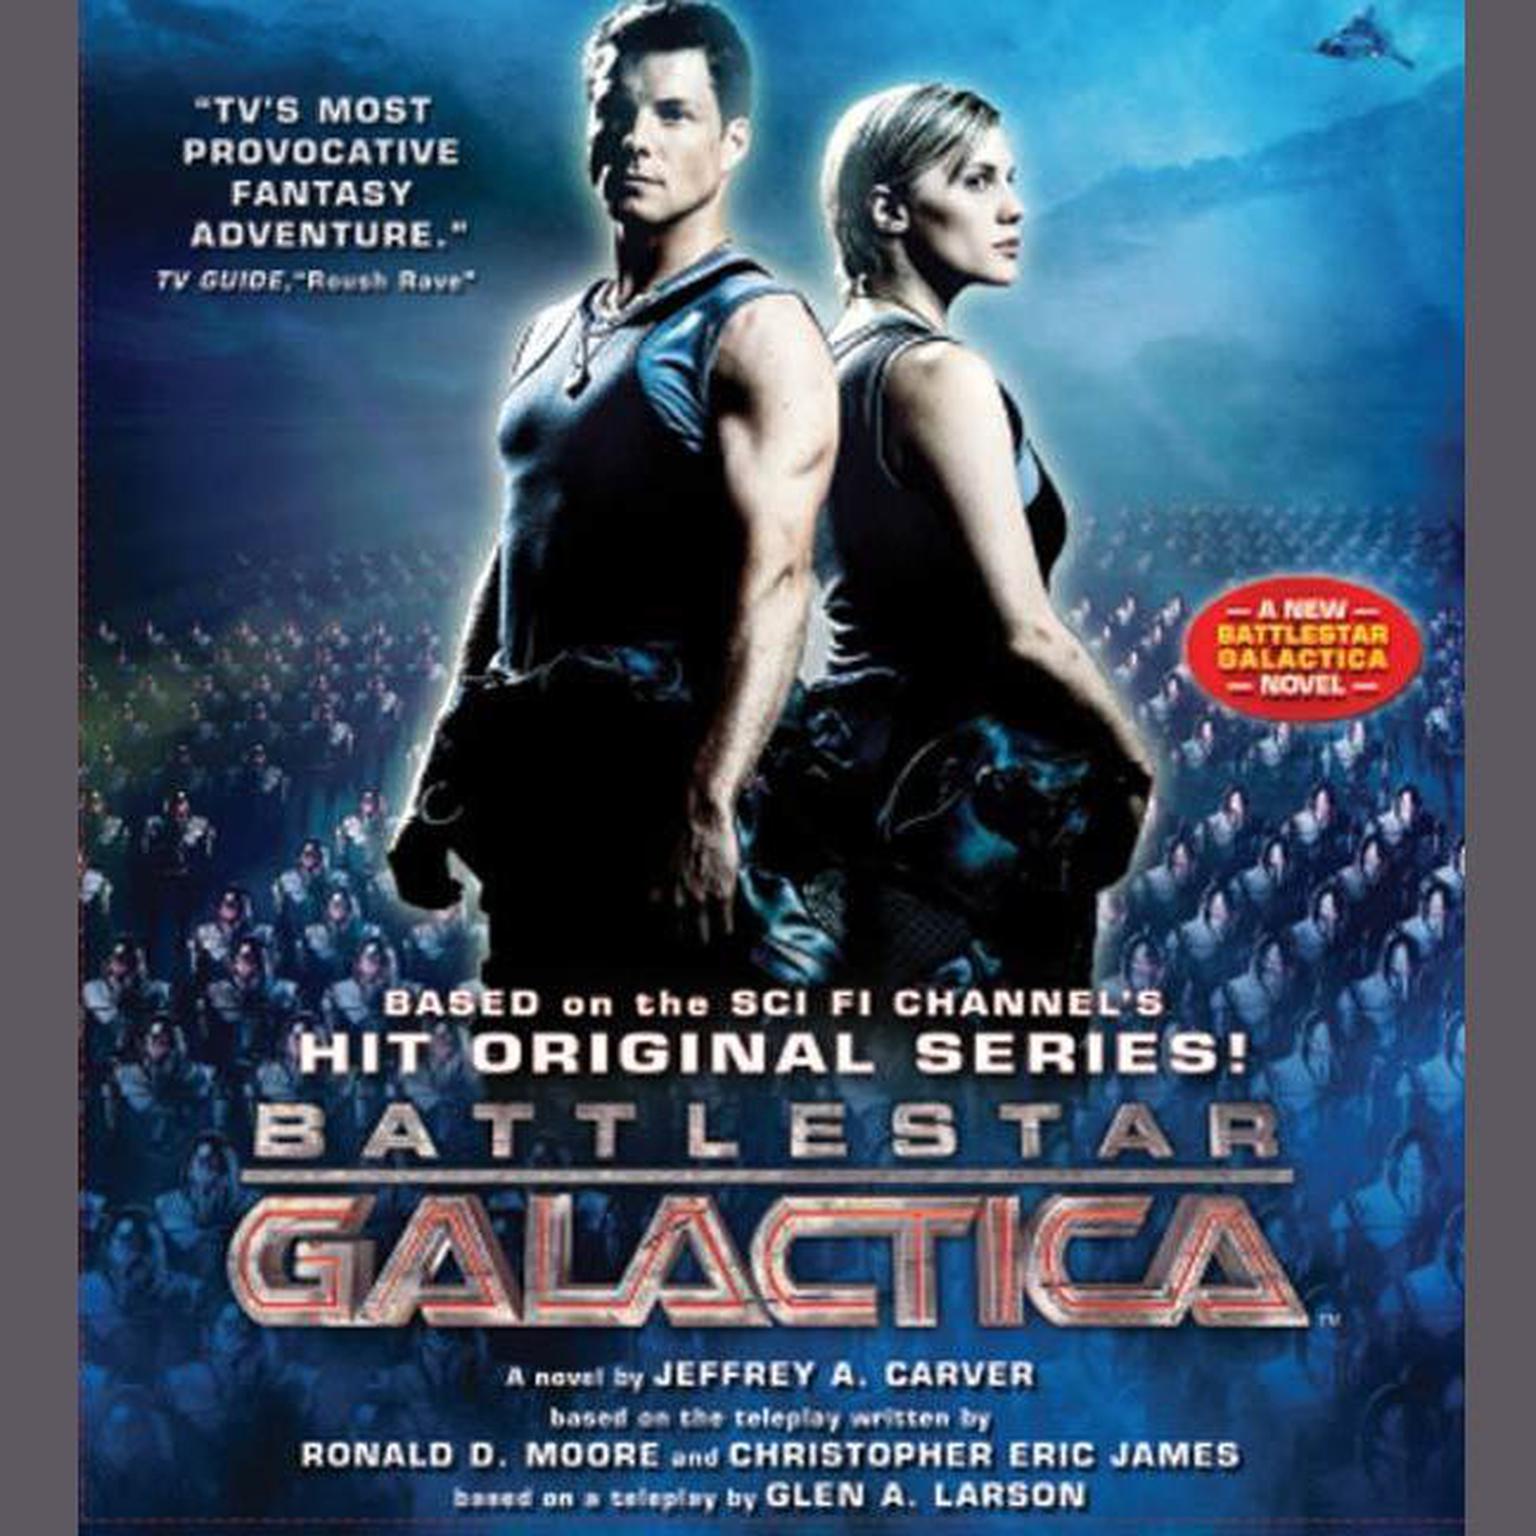 Battlestar Galactica (Abridged) Audiobook, by Jeffrey A. Carver